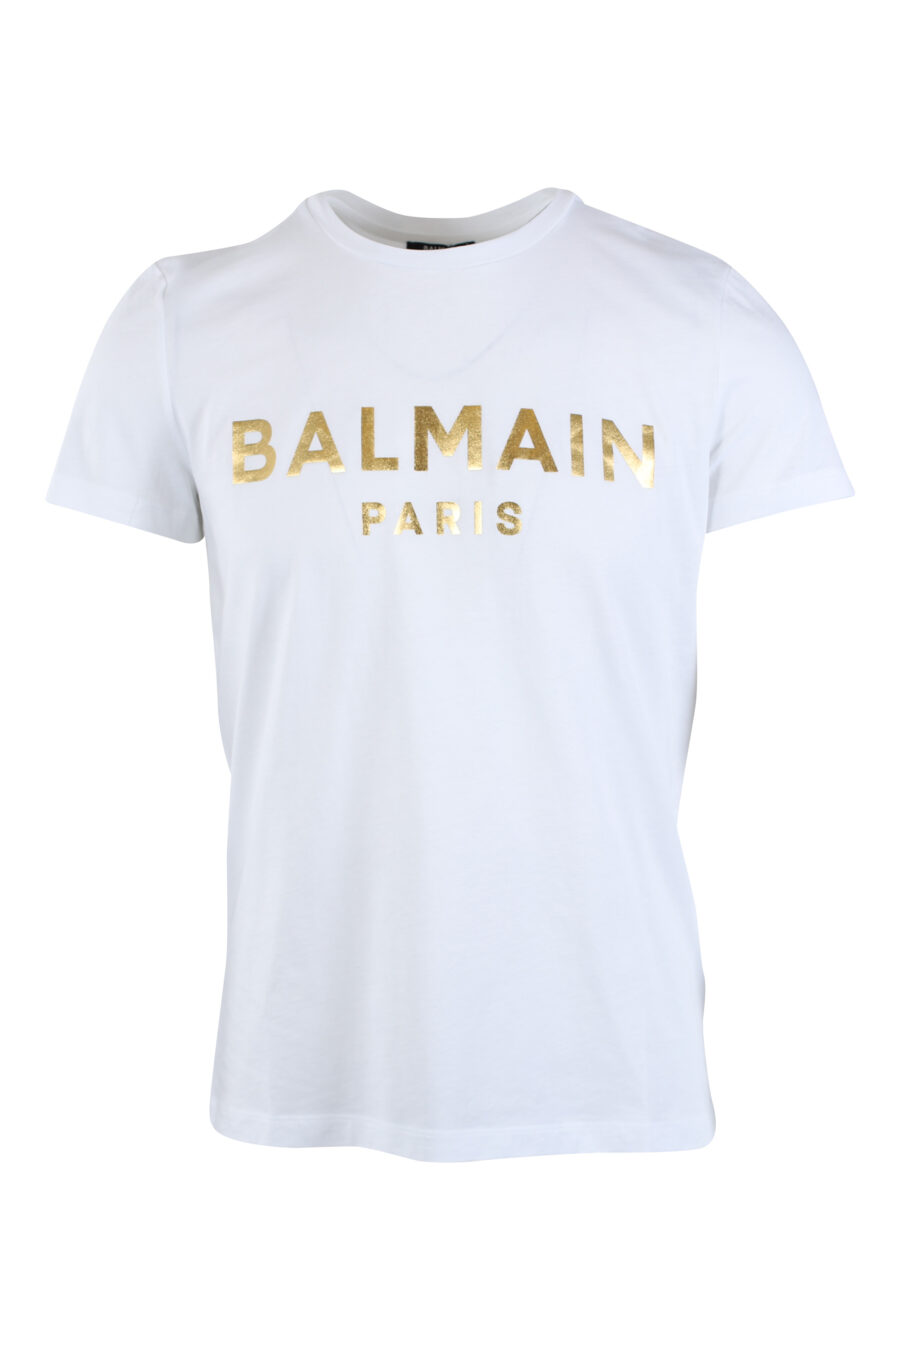 Camiseta blanca de algodón eco con maxilogo dorado "paris" - IMG 2611